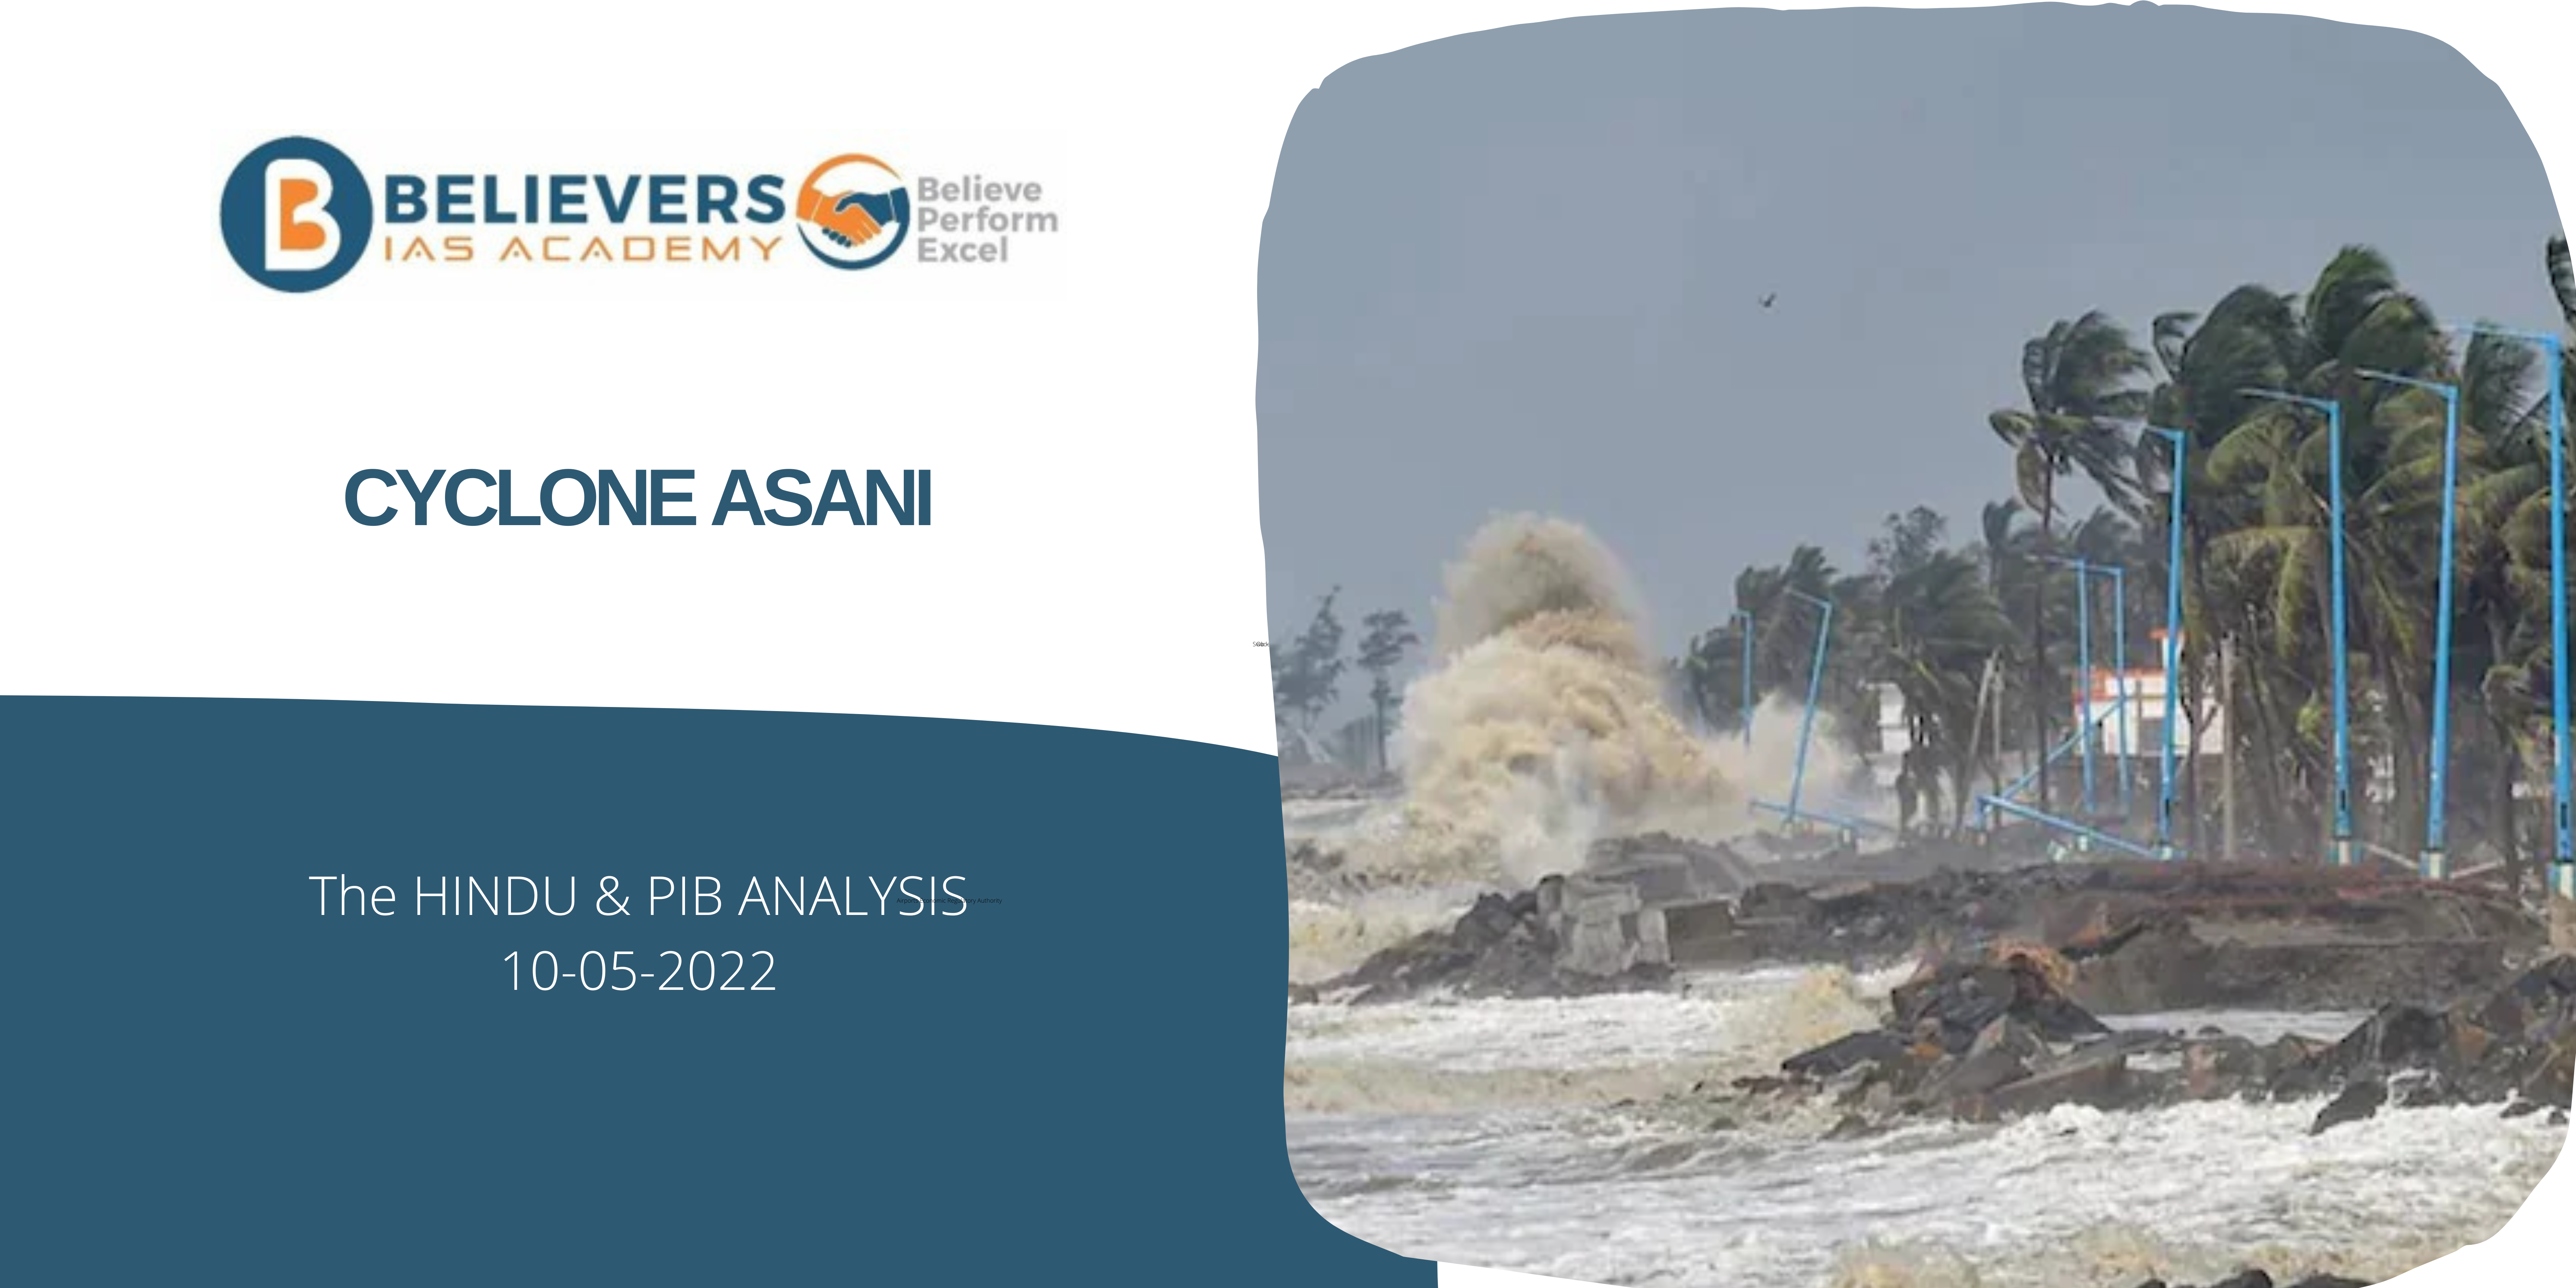 UPSC Current affairs - Cyclone Asani